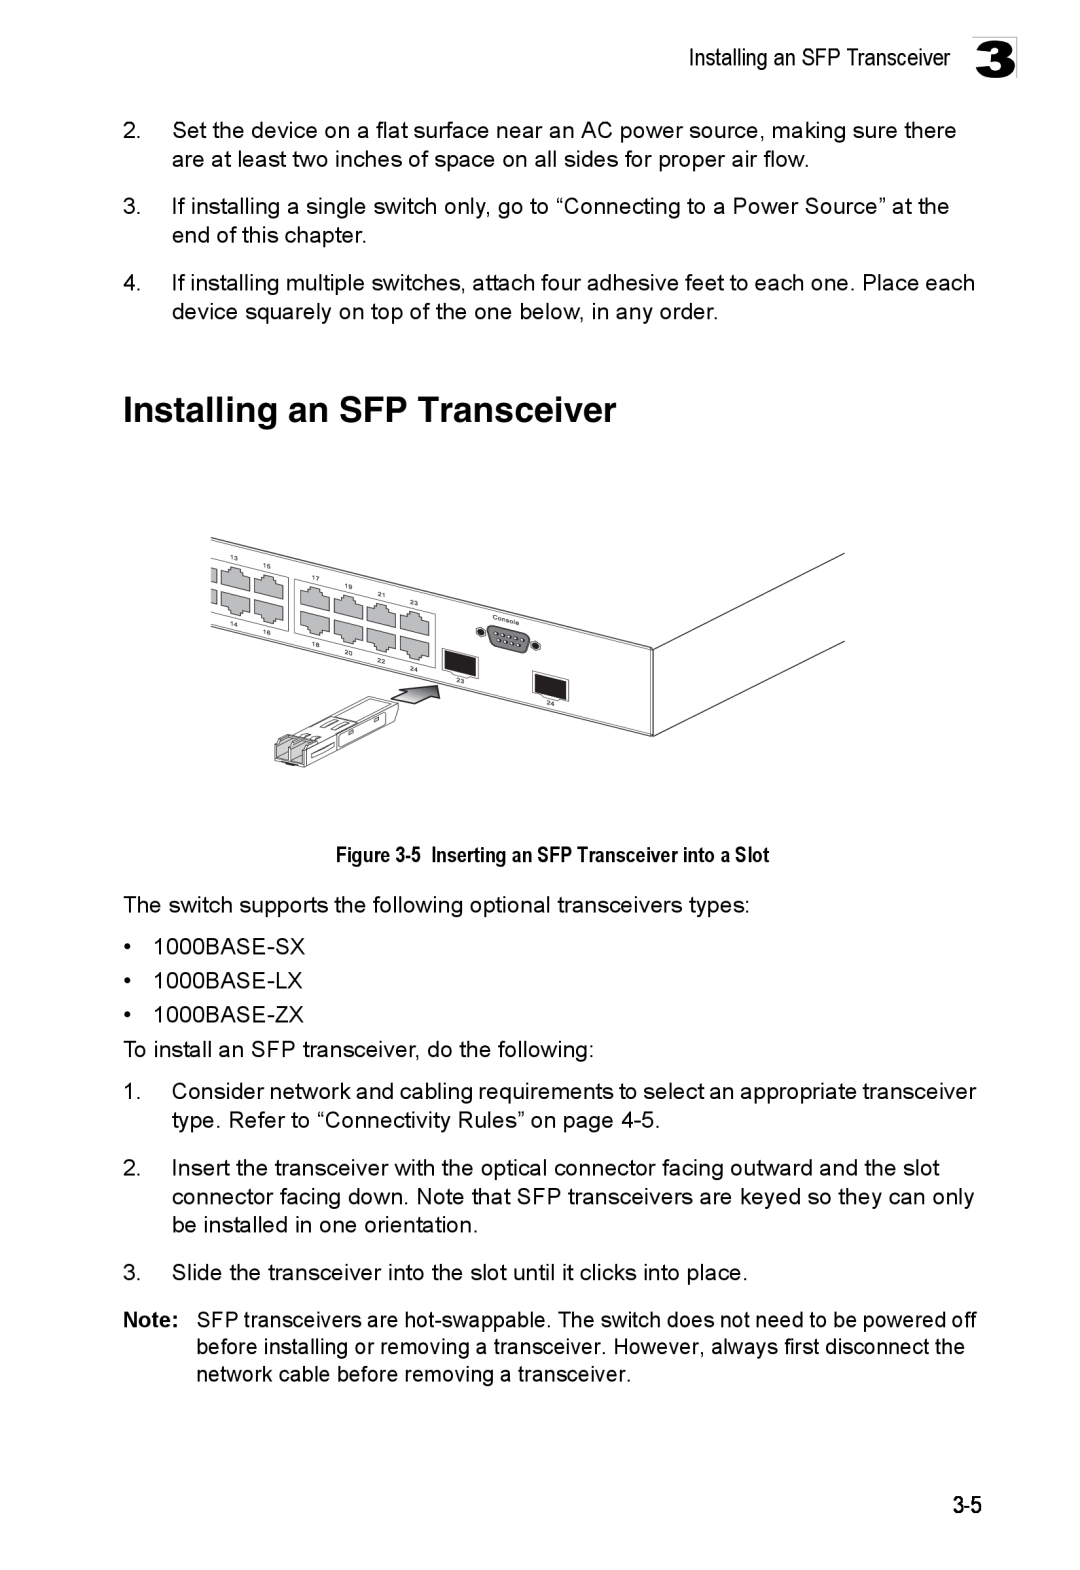 Accton Technology ES4524M-POE manual Installing an SFP Transceiver, 5 Inserting an SFP Transceiver into a Slot 